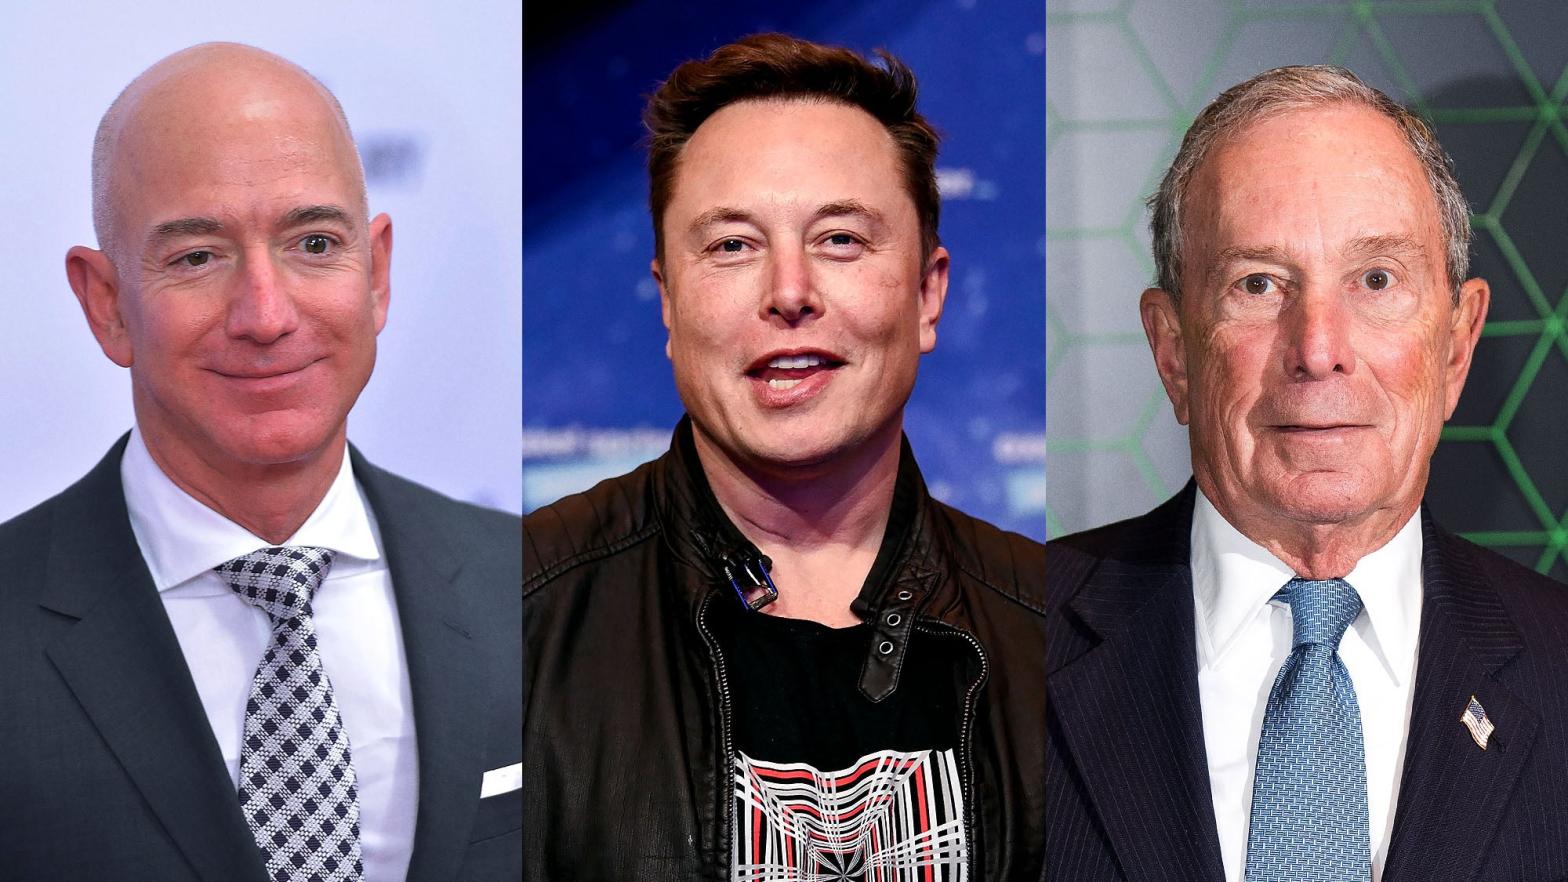 Photo: Bezos: Mandel Ngan / Contributor; Musk: Britta Pedersen / Contributor; Bloomberg: Jeff Spicer / Stringer